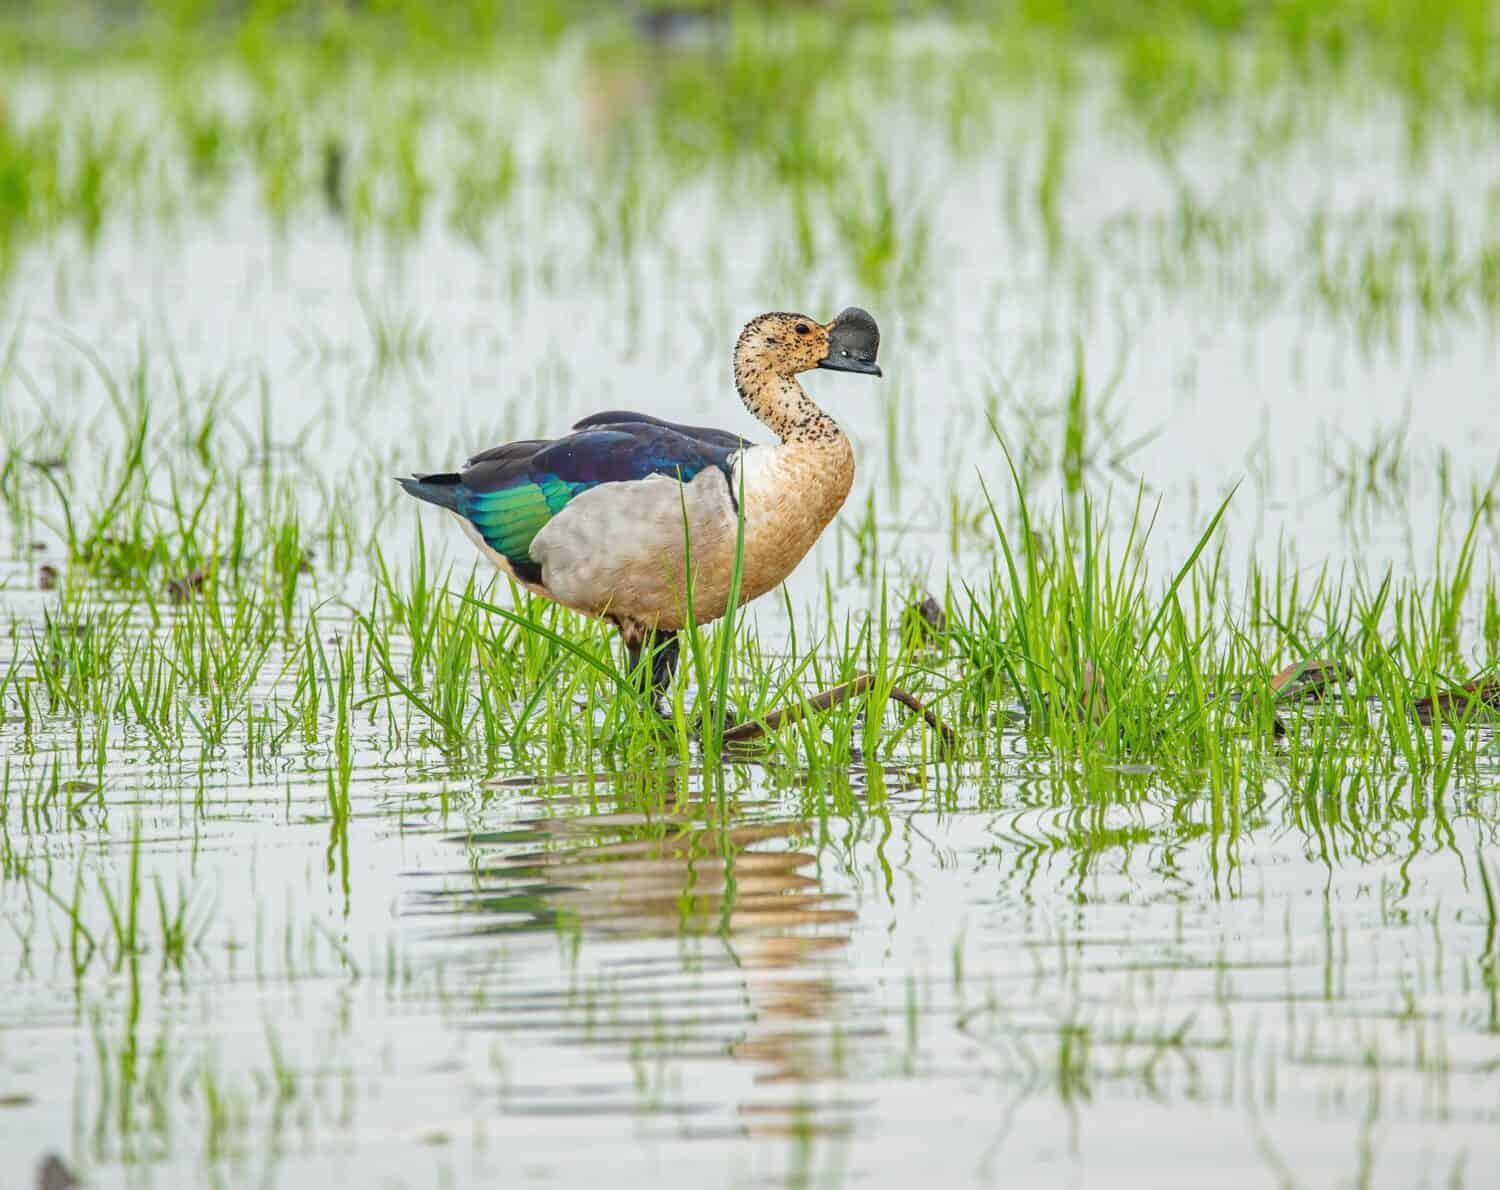 Knob-billed duck, Comb duck(Sarkidiornis melanotos) relax in nature.